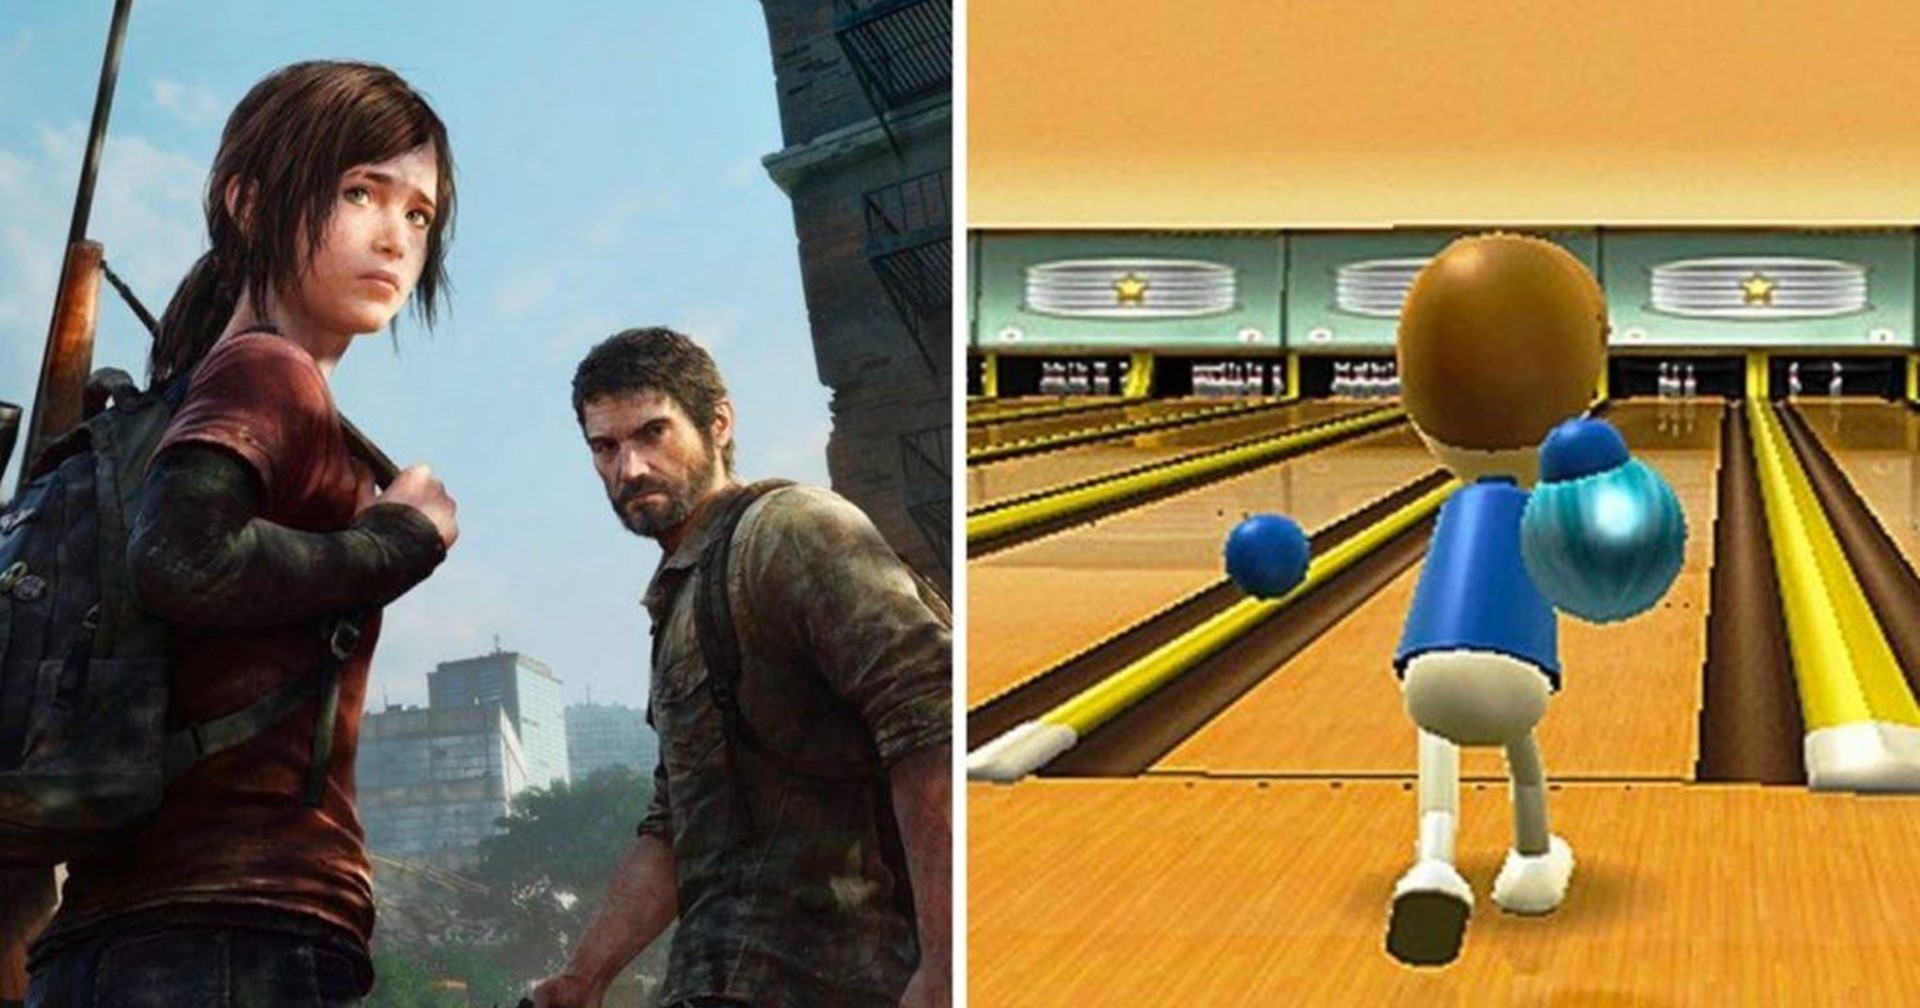 The Last of Us และ Wii Sports ถูกเพิ่มชื่อเข้าหอเกียรติยศวิดีโอเกม